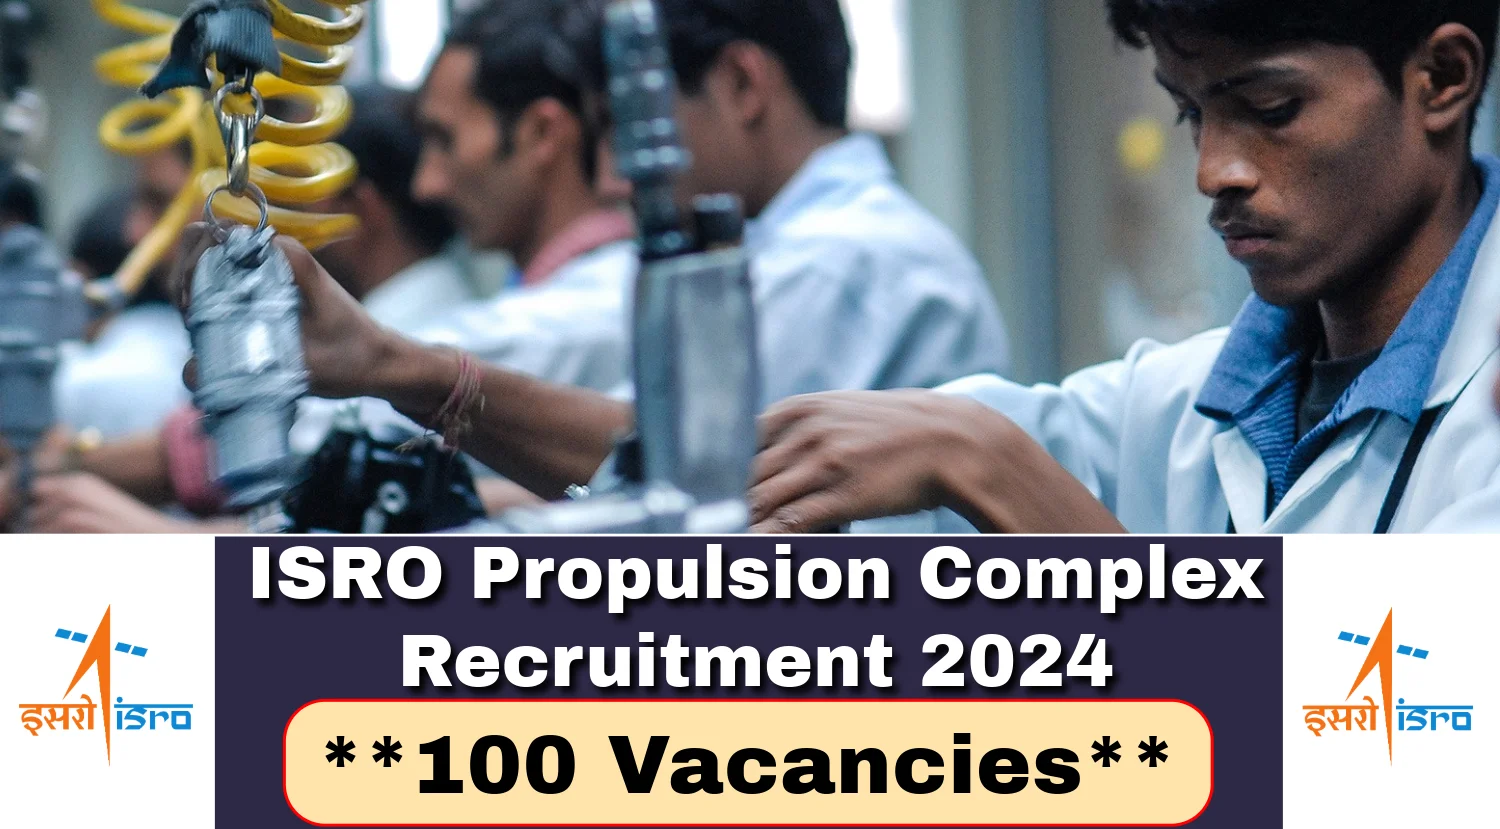 ISRO IPRC Recruitment Notification 2024 Out for 100 Vacancies under ISRO Propulsion Complex